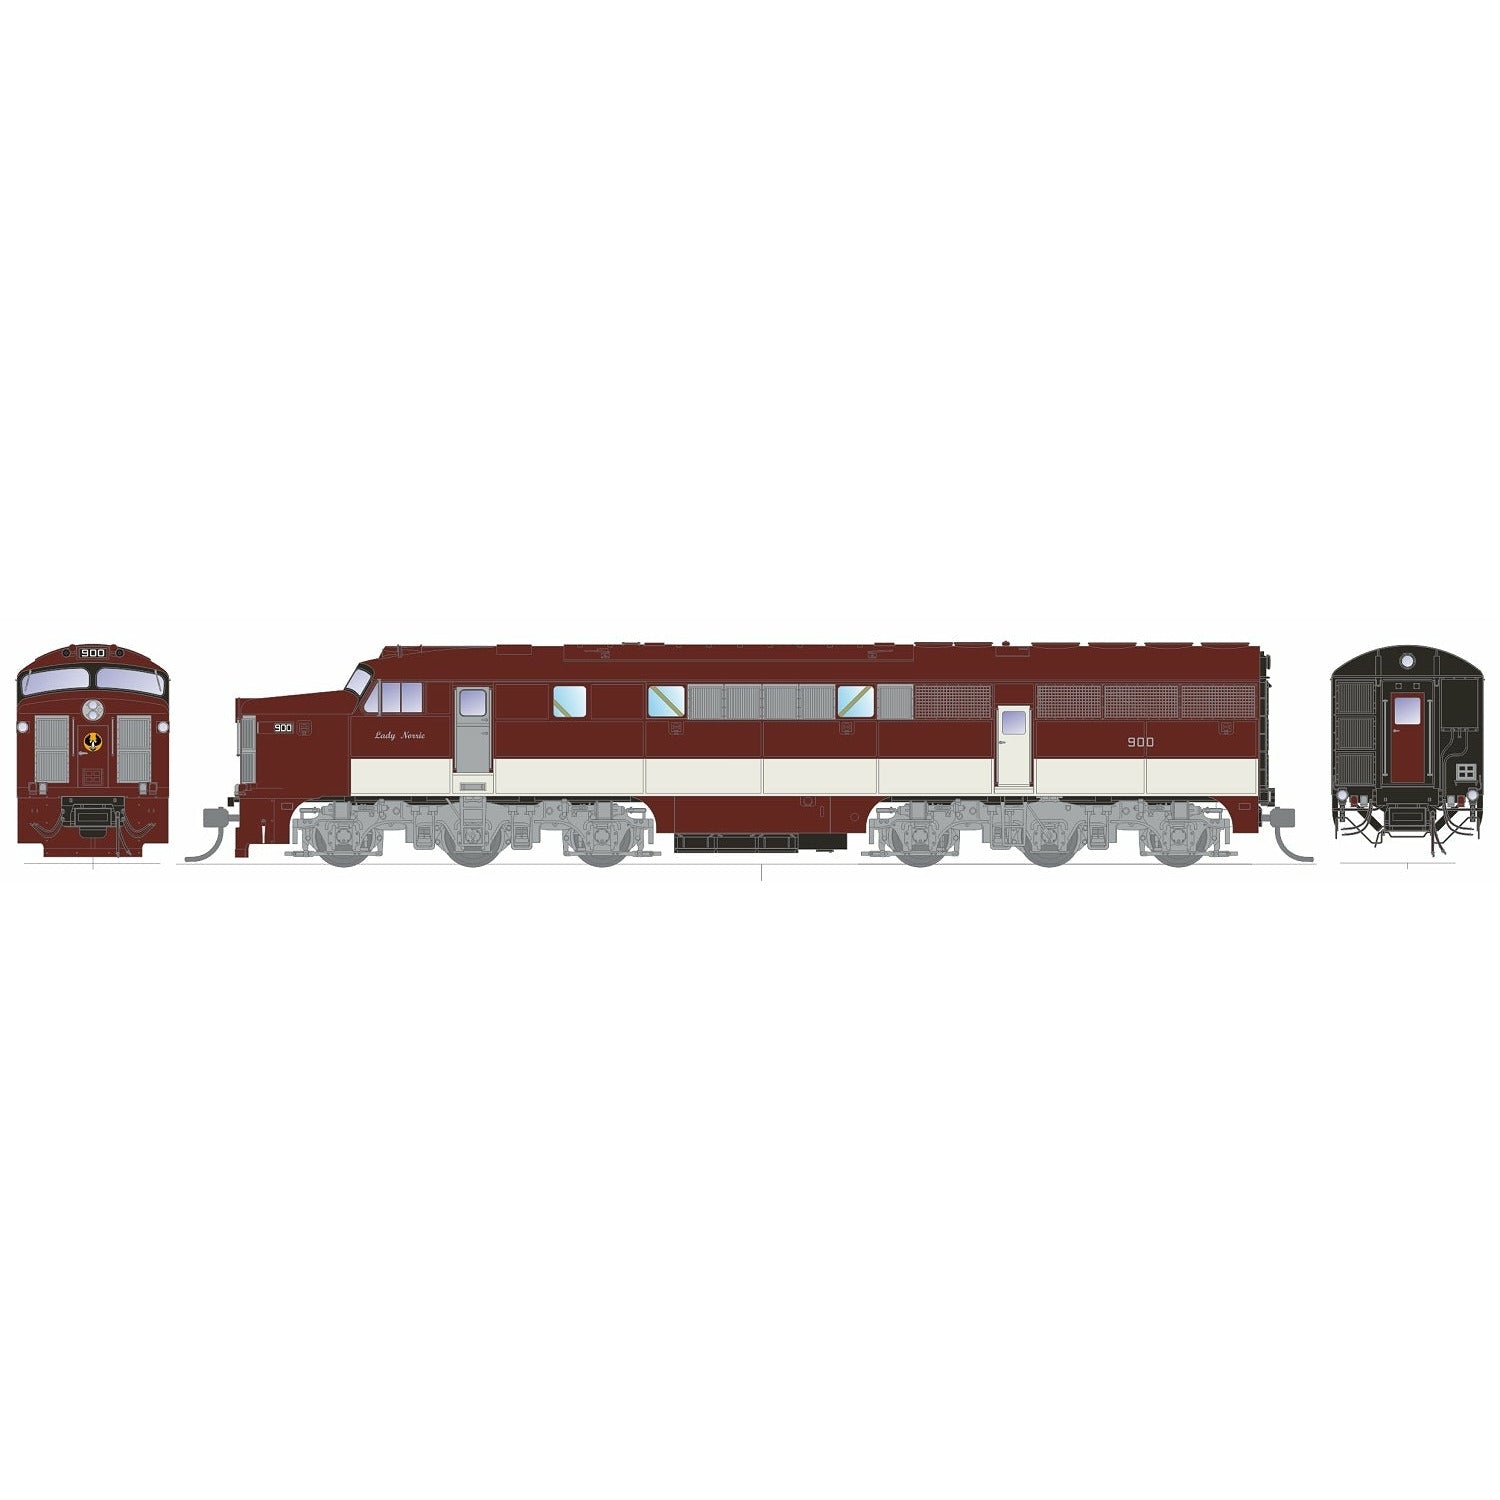 SDS MODELS HO 900 Class Locomotive #900 Preserved 1988 -